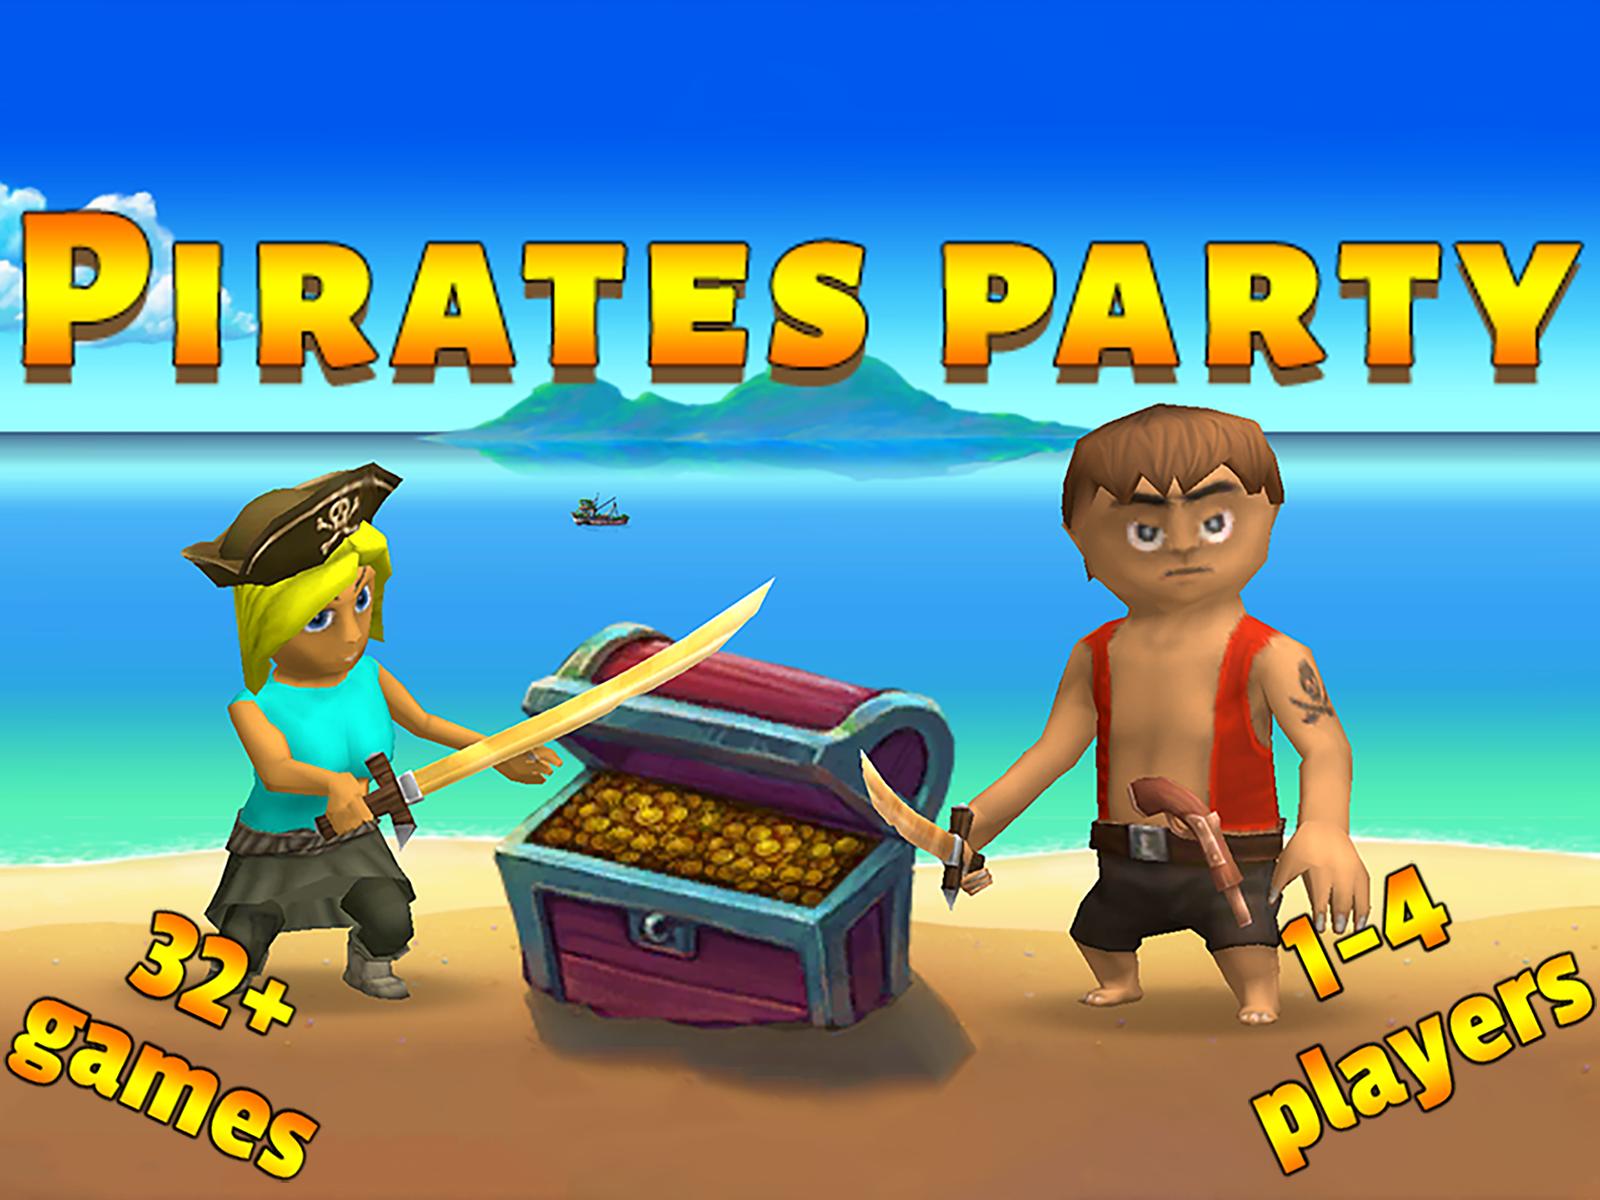 Pirates party: 2 3 4 players 2.17 Screenshot 17